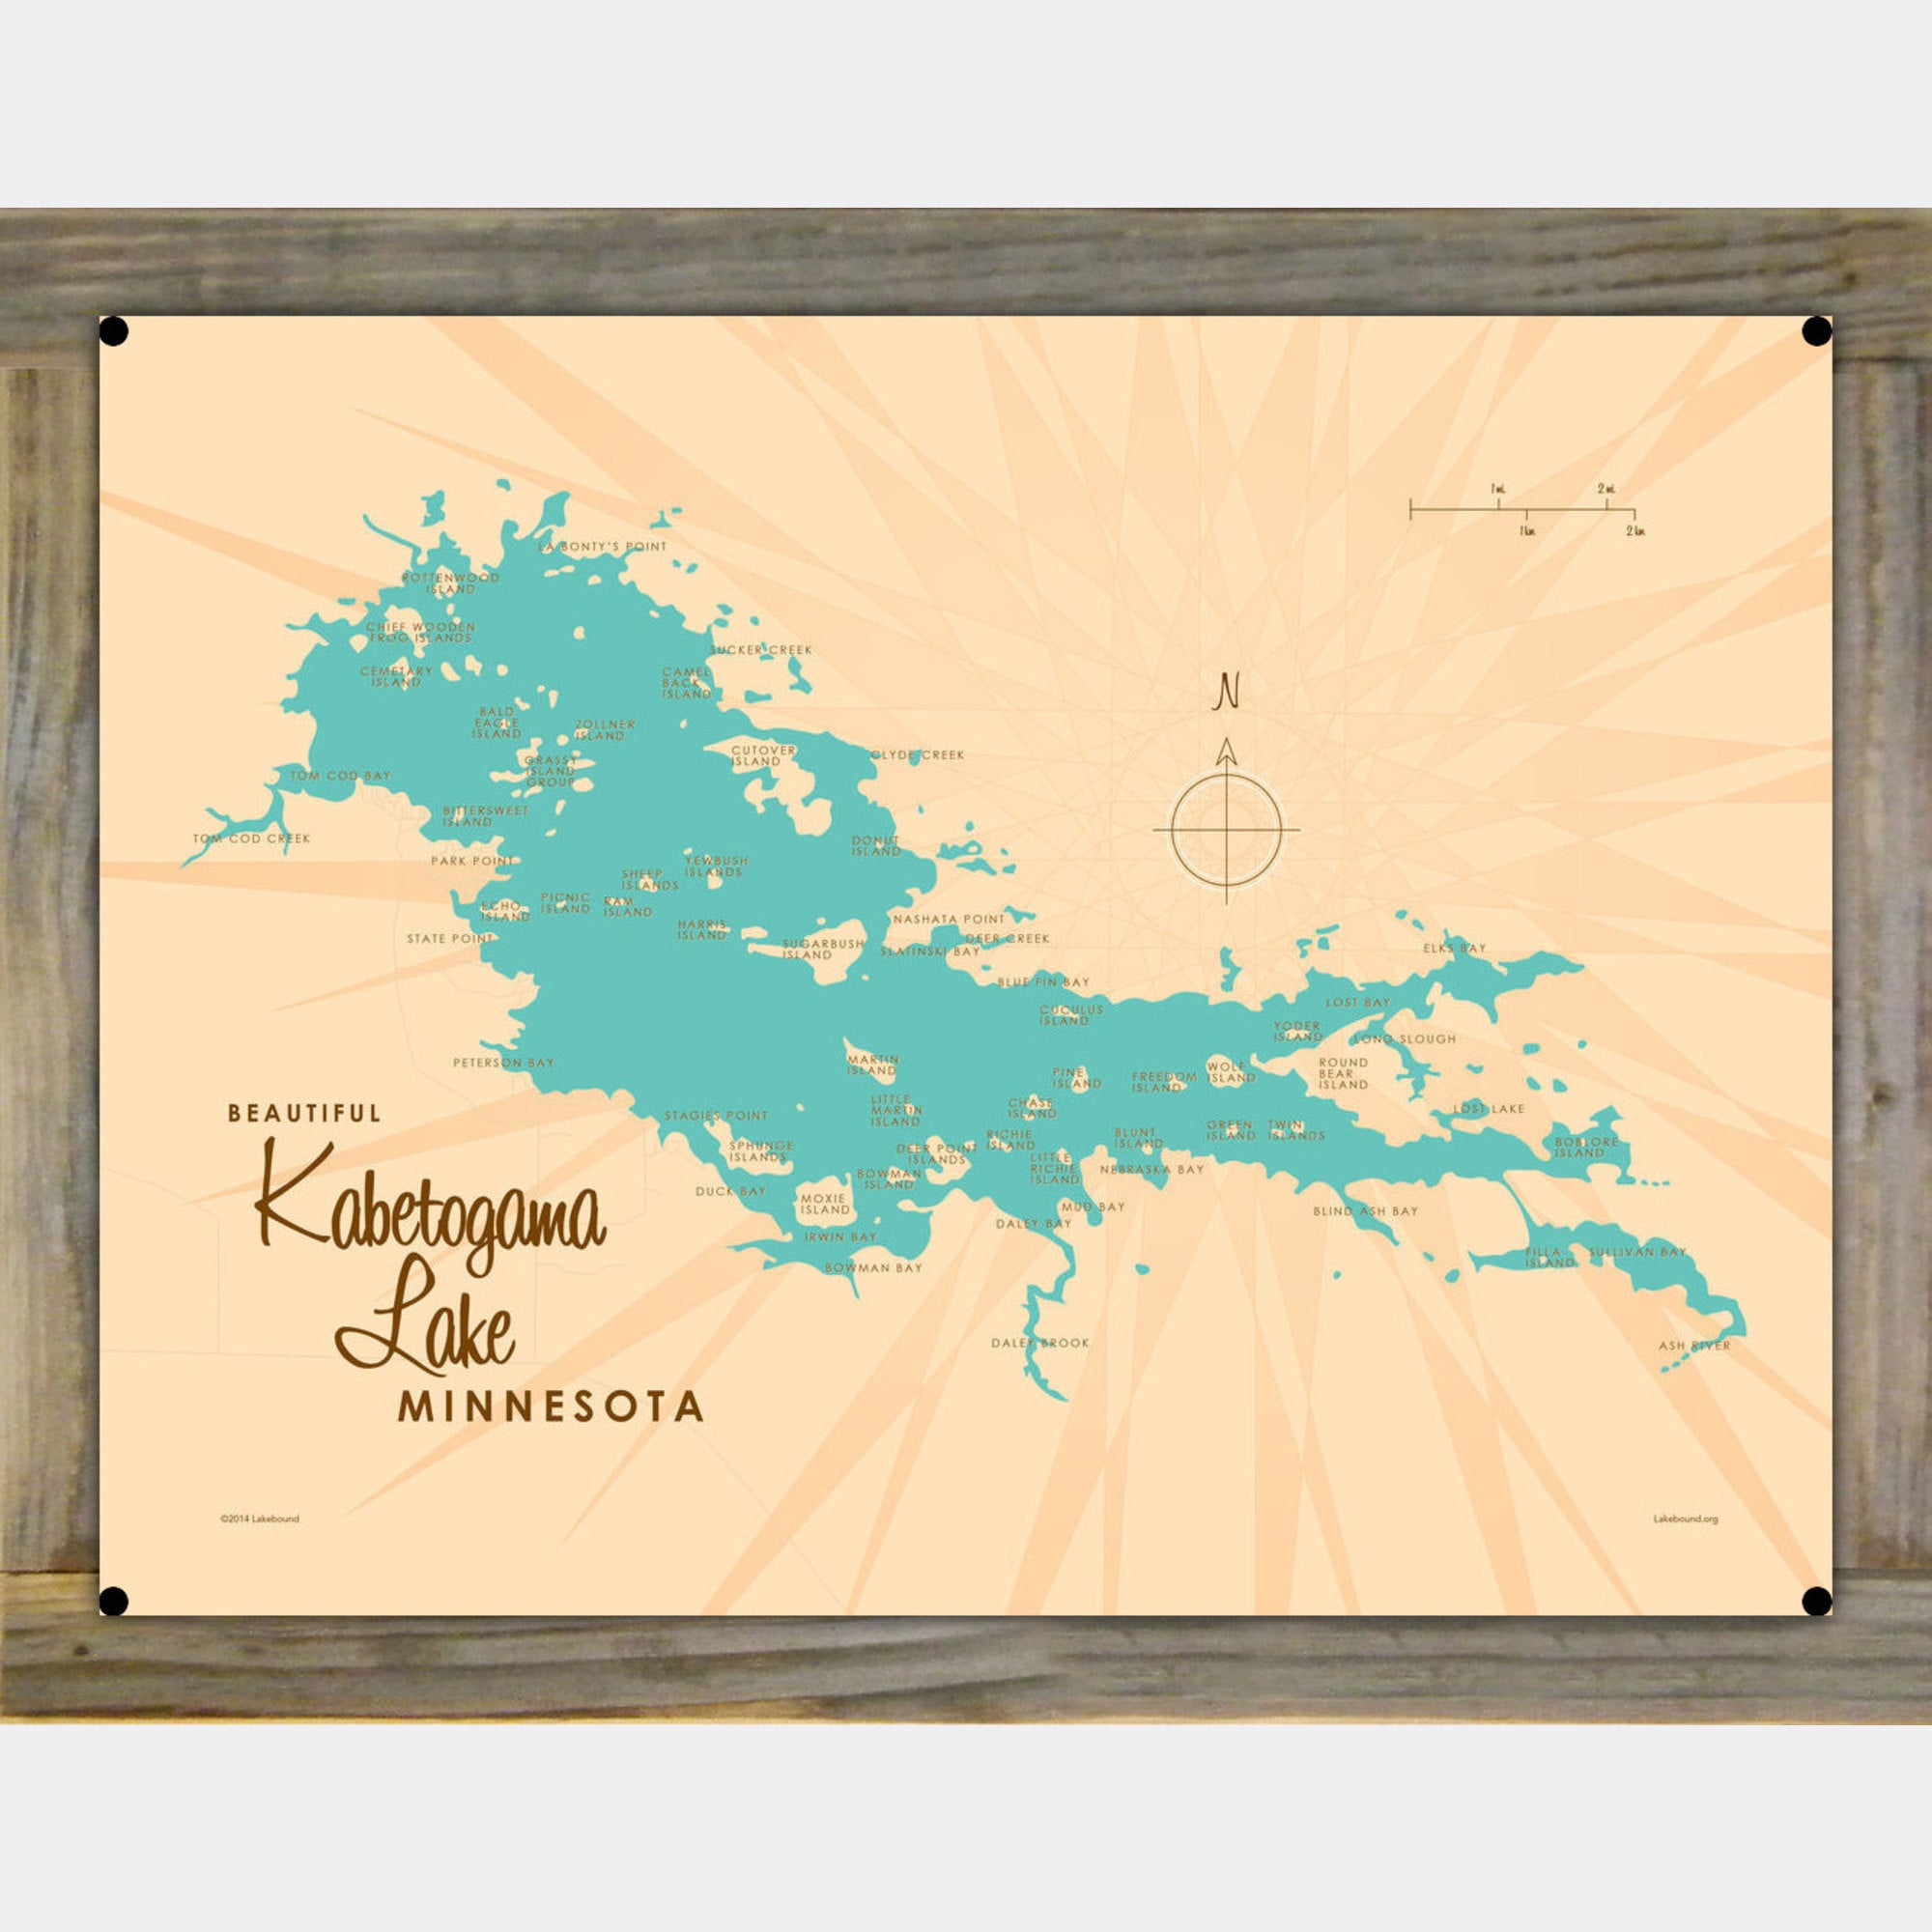 Kabetogama Lake Minnesota, Wood-Mounted Metal Sign Map Art